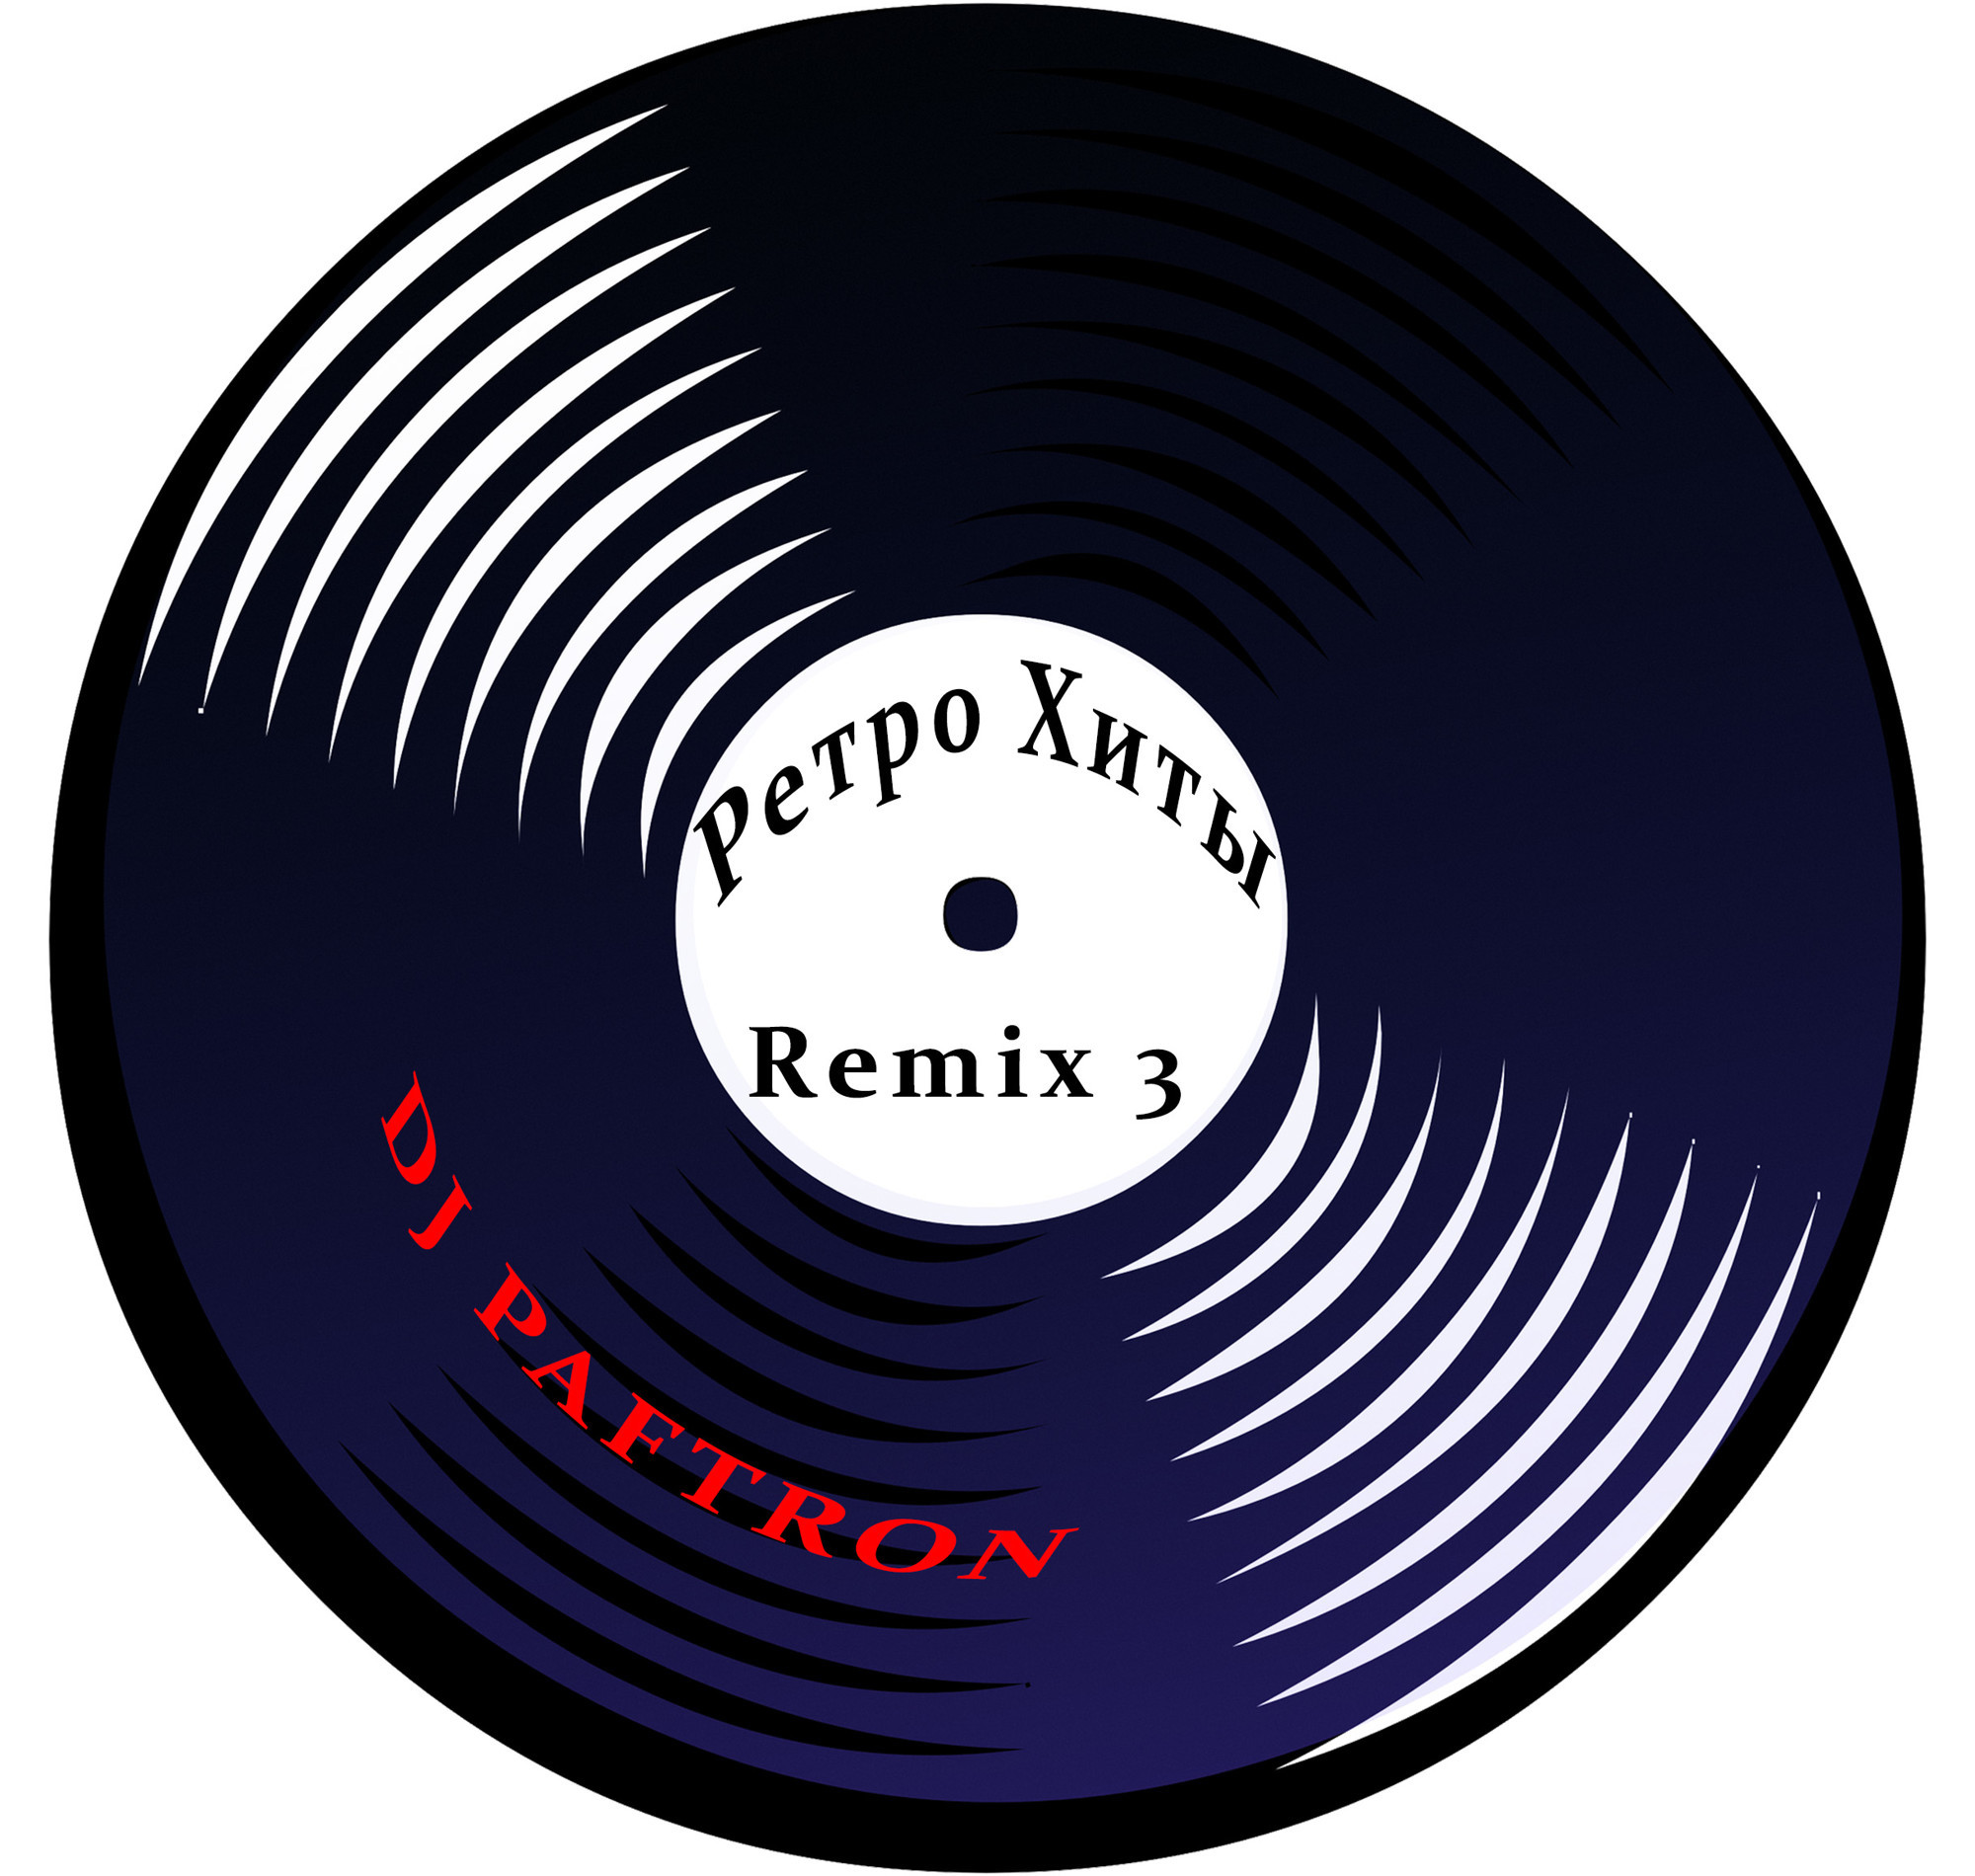 Don mp3 remix. Ретро хиты. Ремикс 3. B3 Remixed. Goldilox информация.